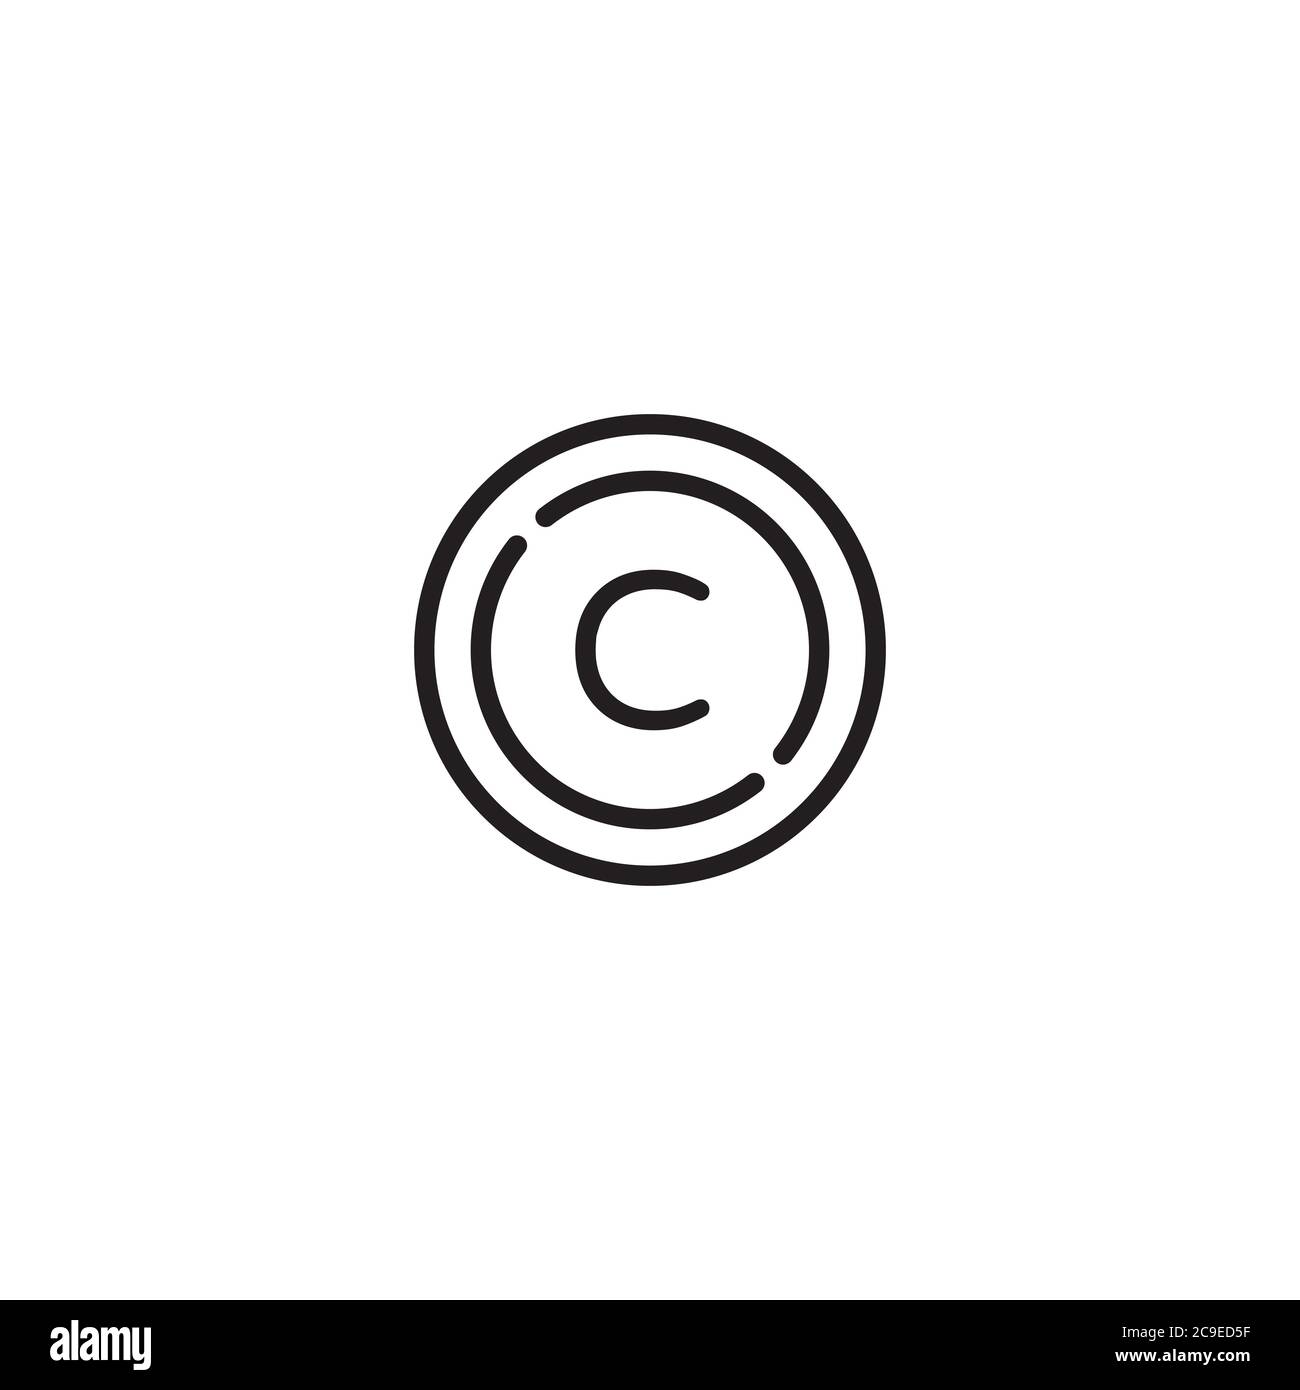 Letter C logo / icon design Stock Vector